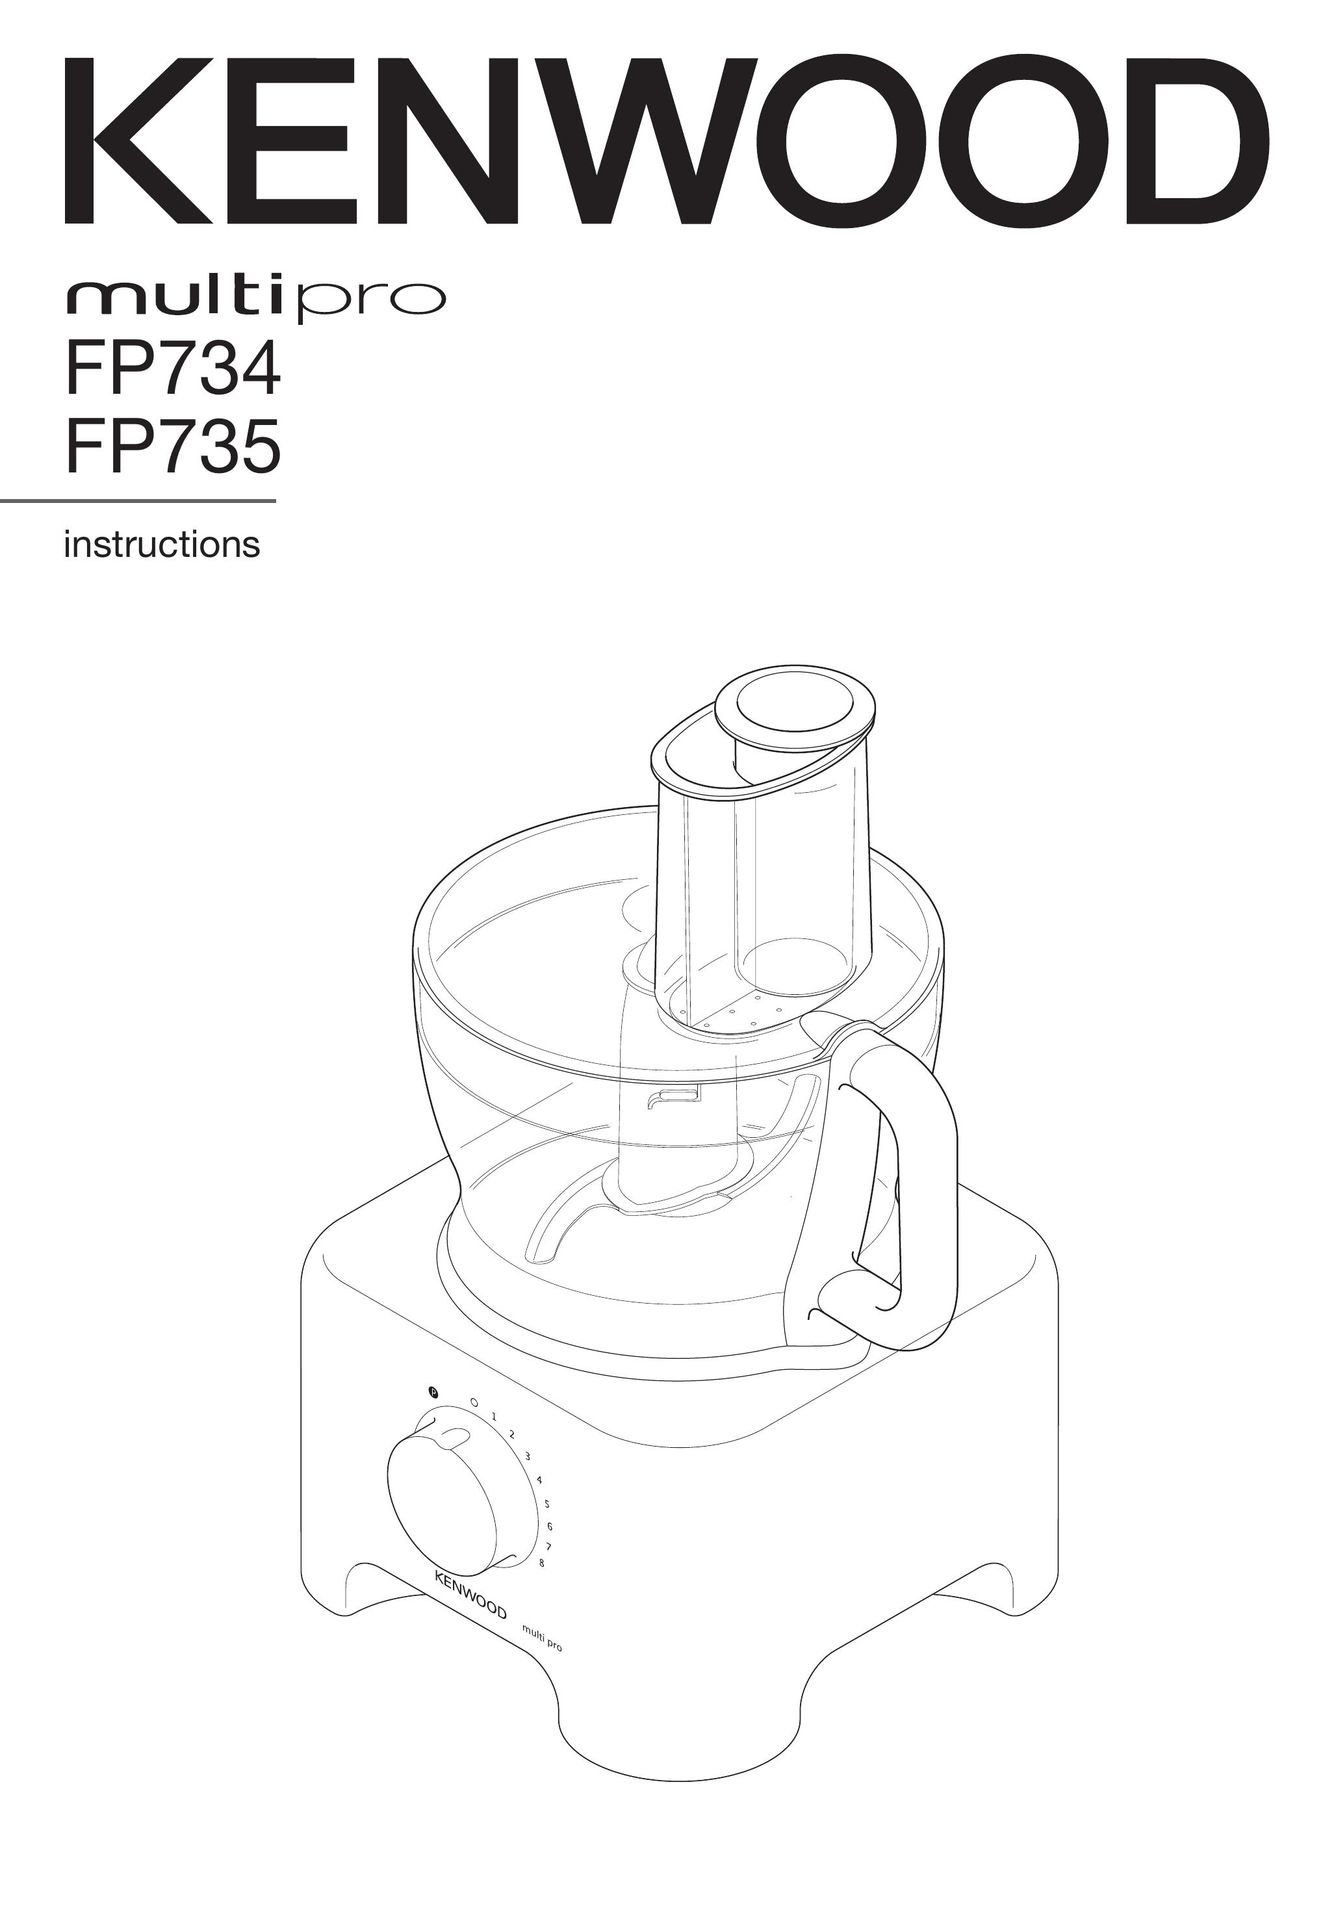 Kenwood FP735 Food Processor User Manual